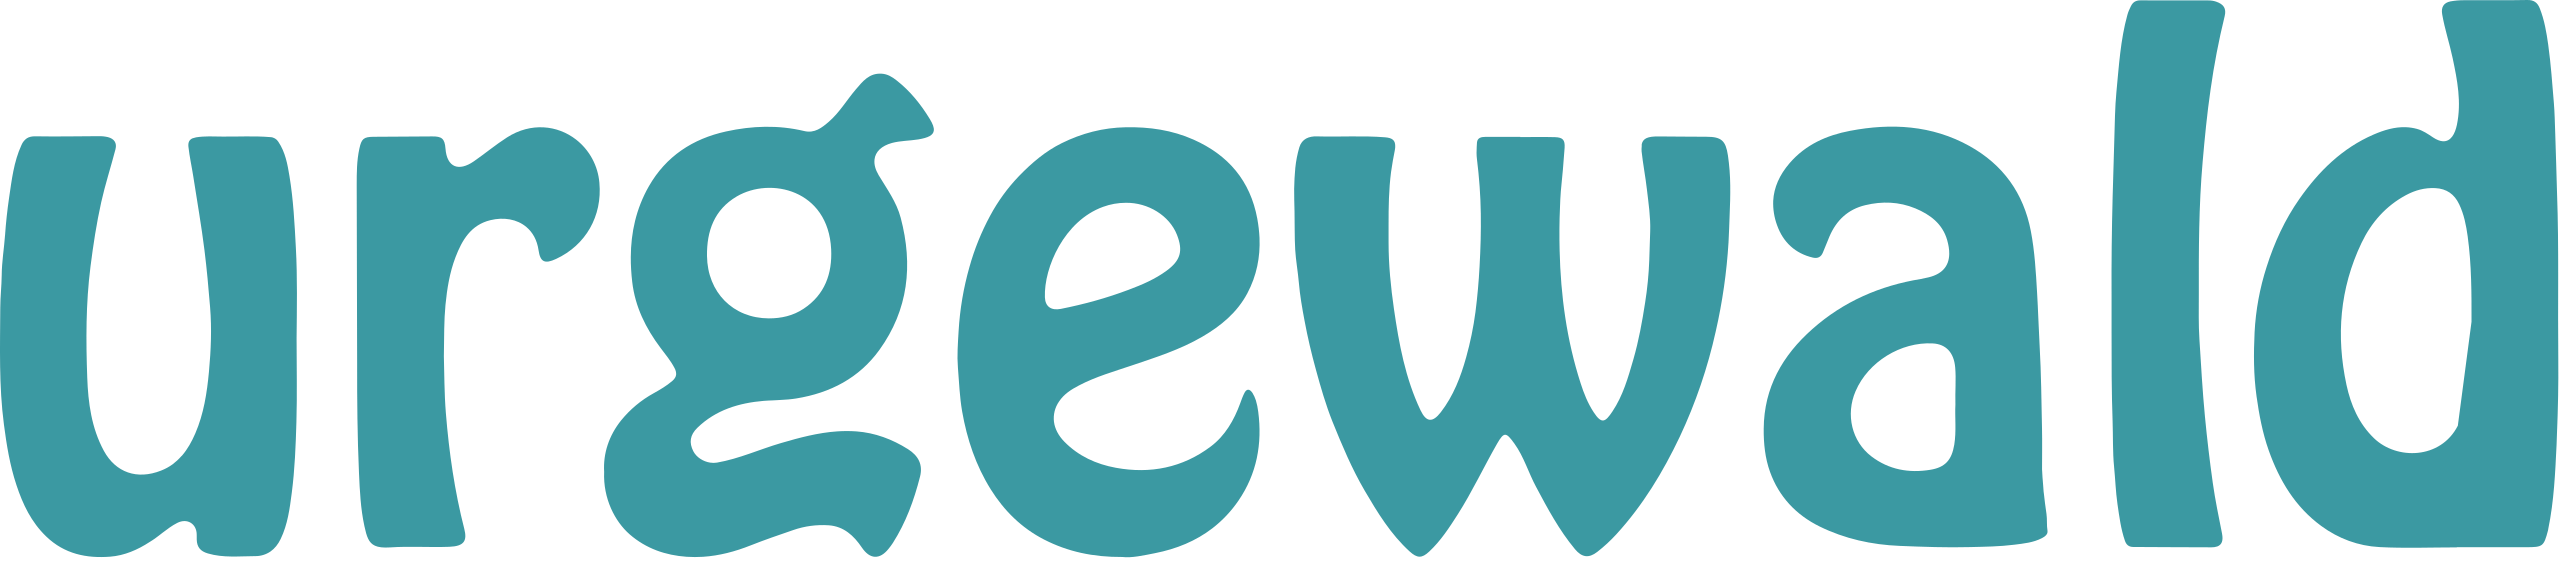 File:Urgewald logo.svg - Wikimedia Commons